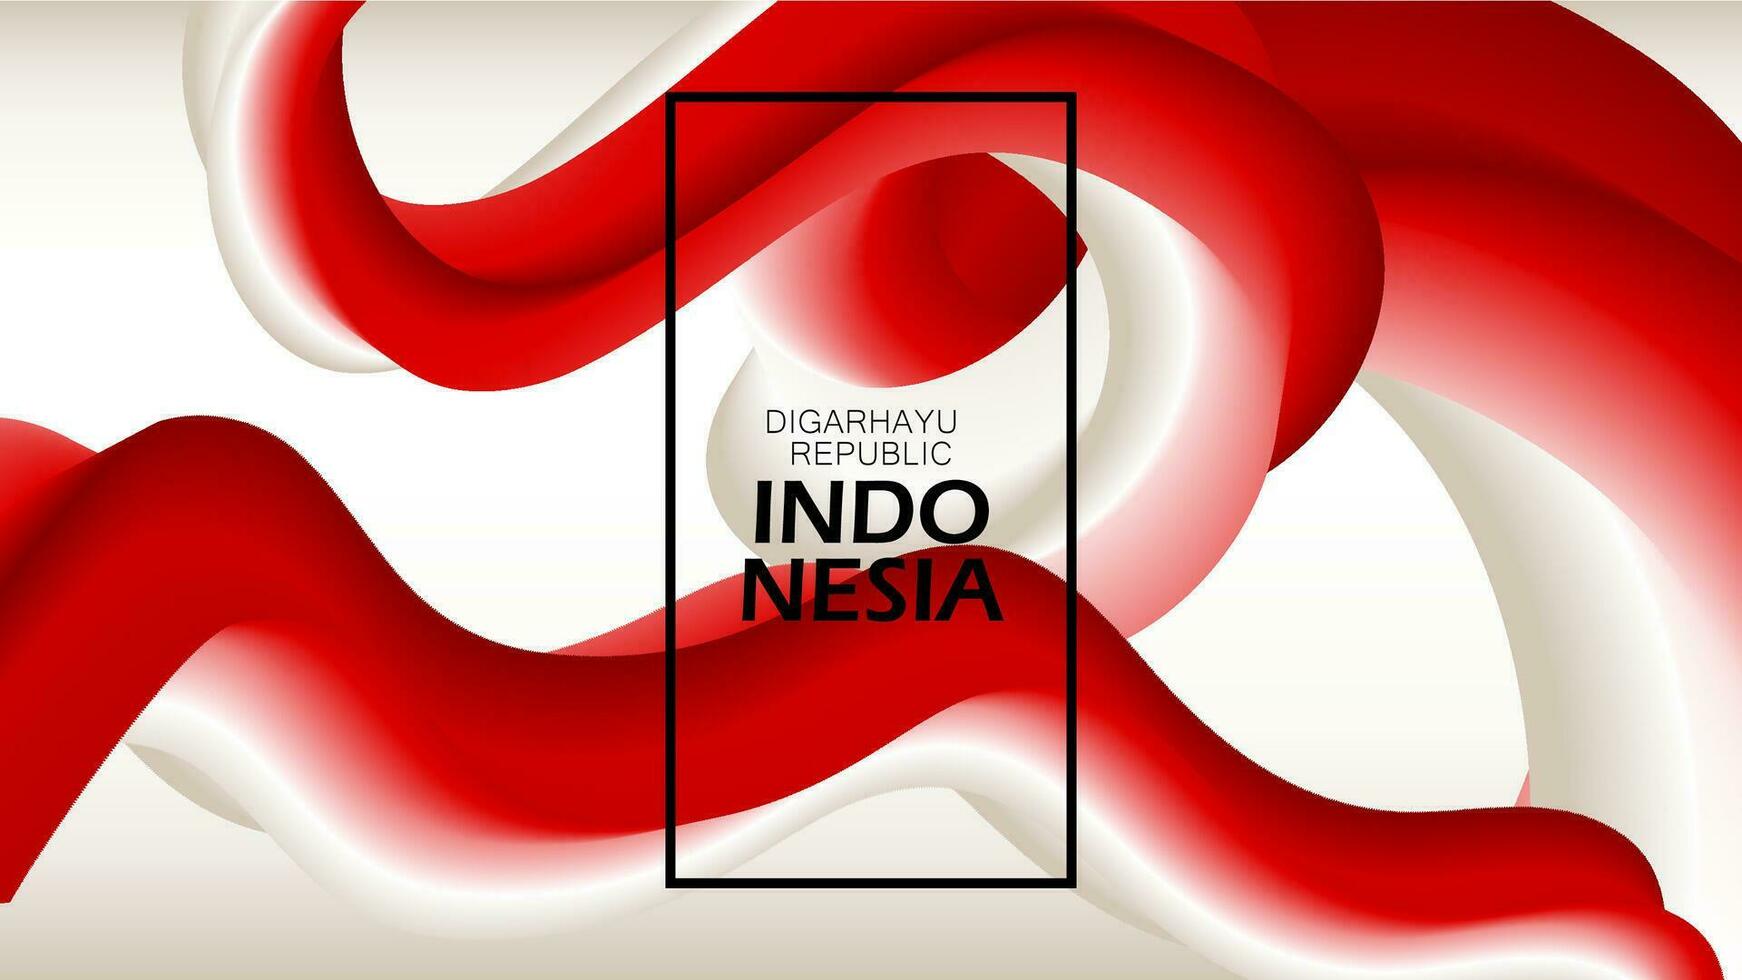 fundo indonésio bandeira abstrato gradiente 3d onda comemoro aniversário 17 agosto digital arte. vetor ilustração. nacional e espírito estilo.